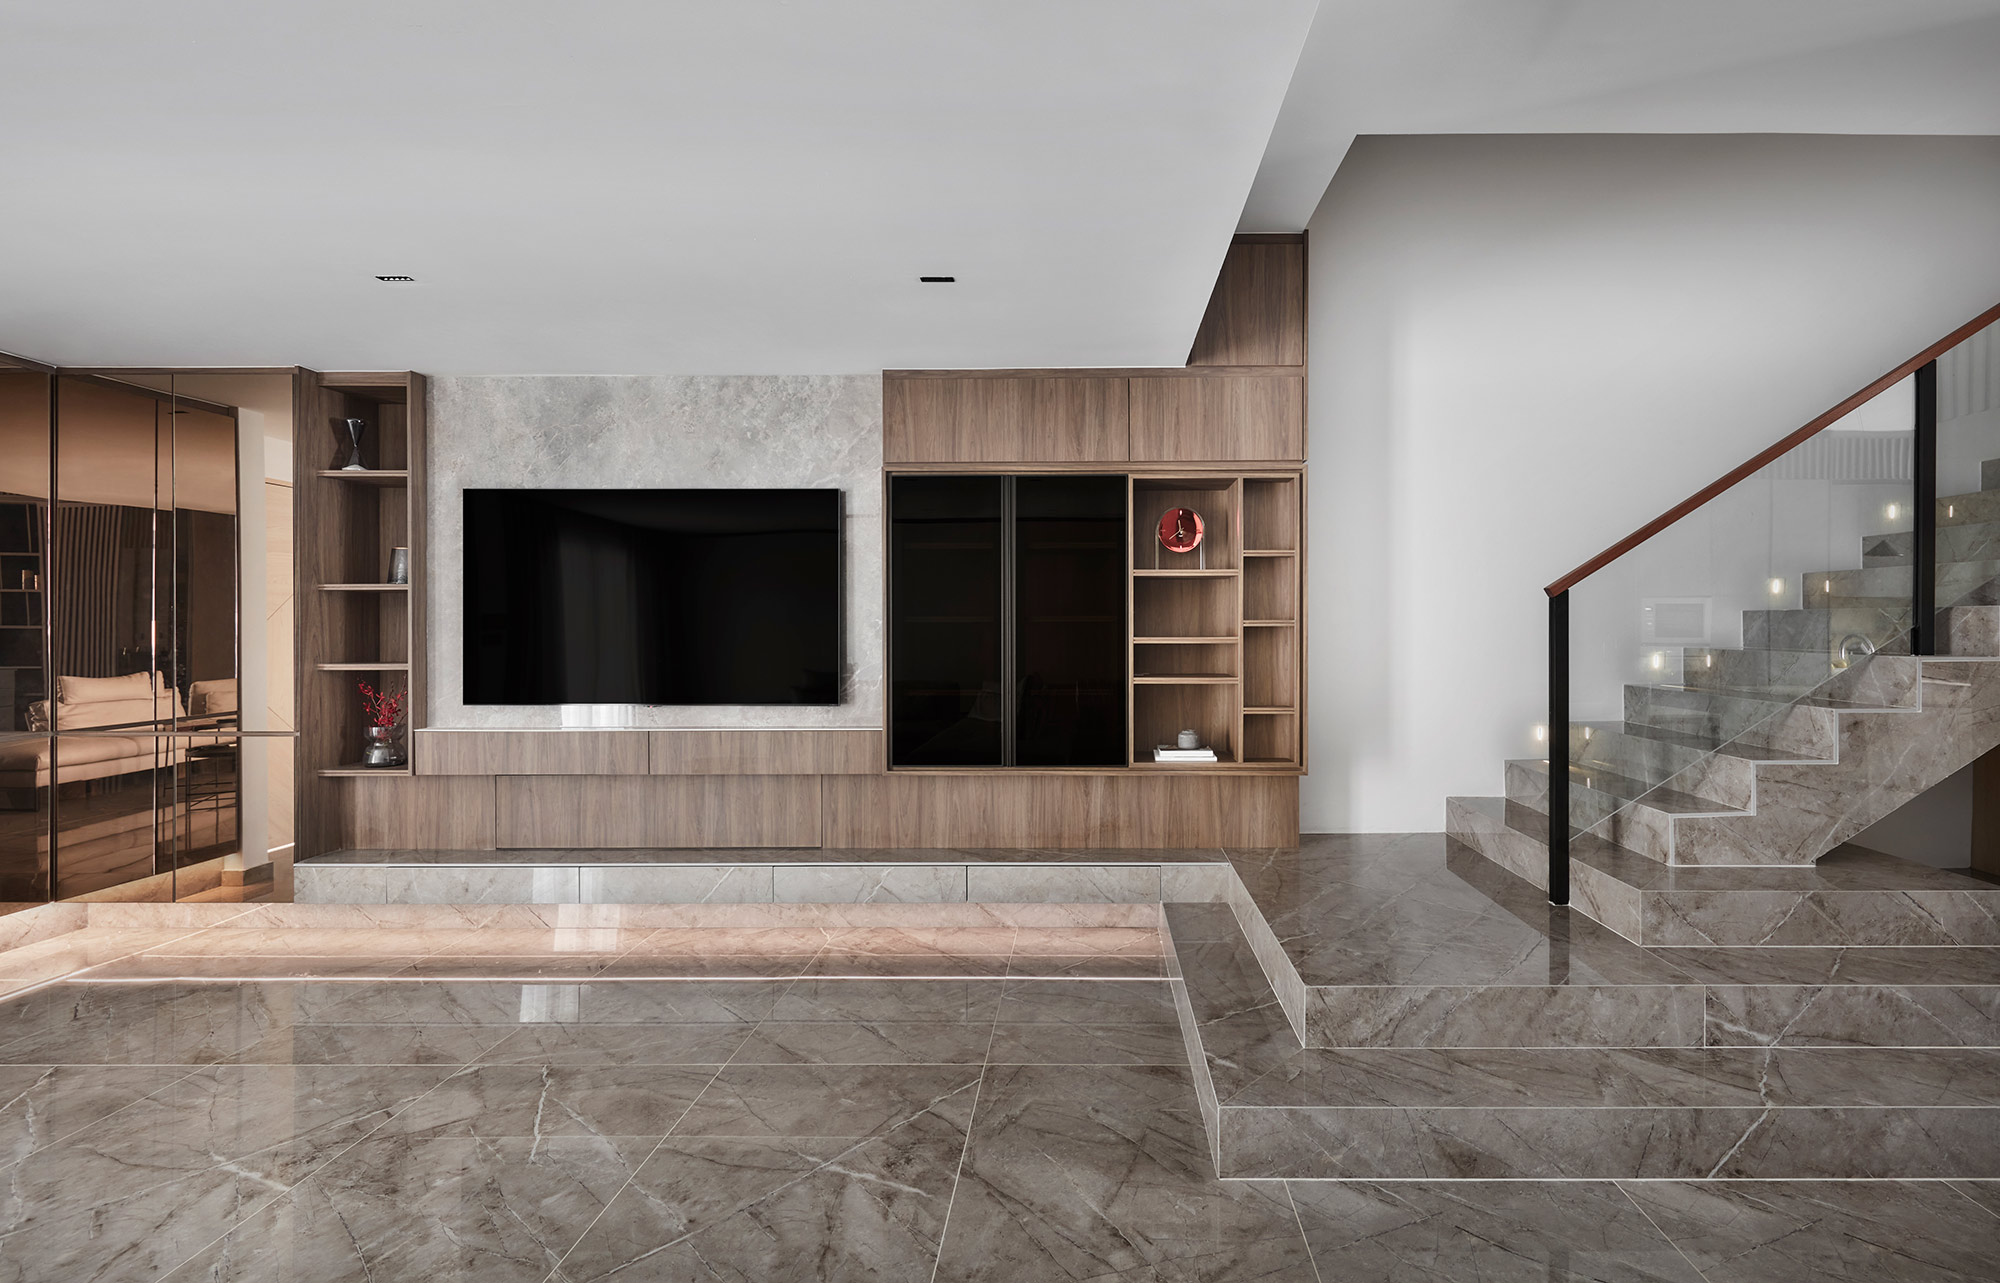 Image of Residential Home by Design Zage 4 1 in Dekton and Sensa, allies of the interior designer Raúl Martins in a very personal refurbishment - Cosentino